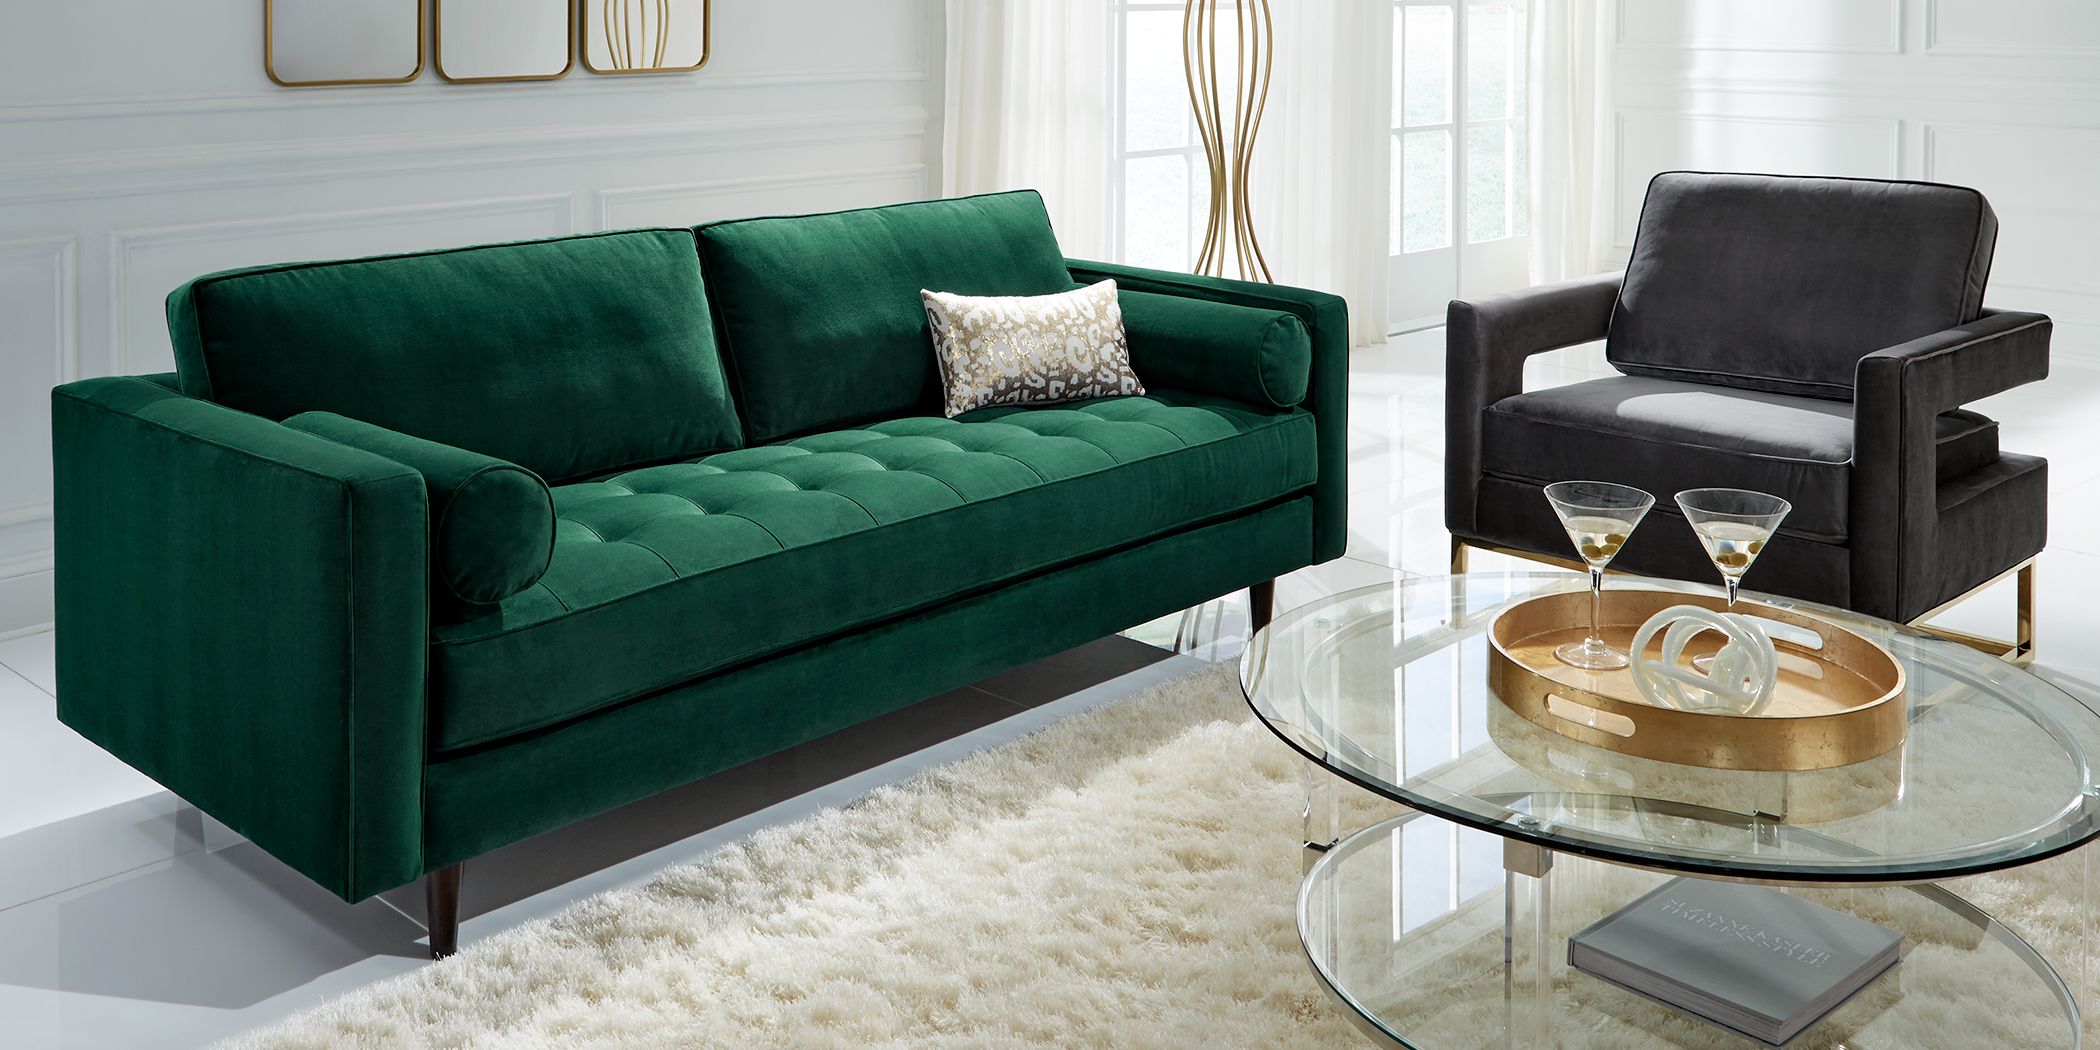 Sofia Vergara Pacific Palisades Emerald Plush 2 Pc Living Room